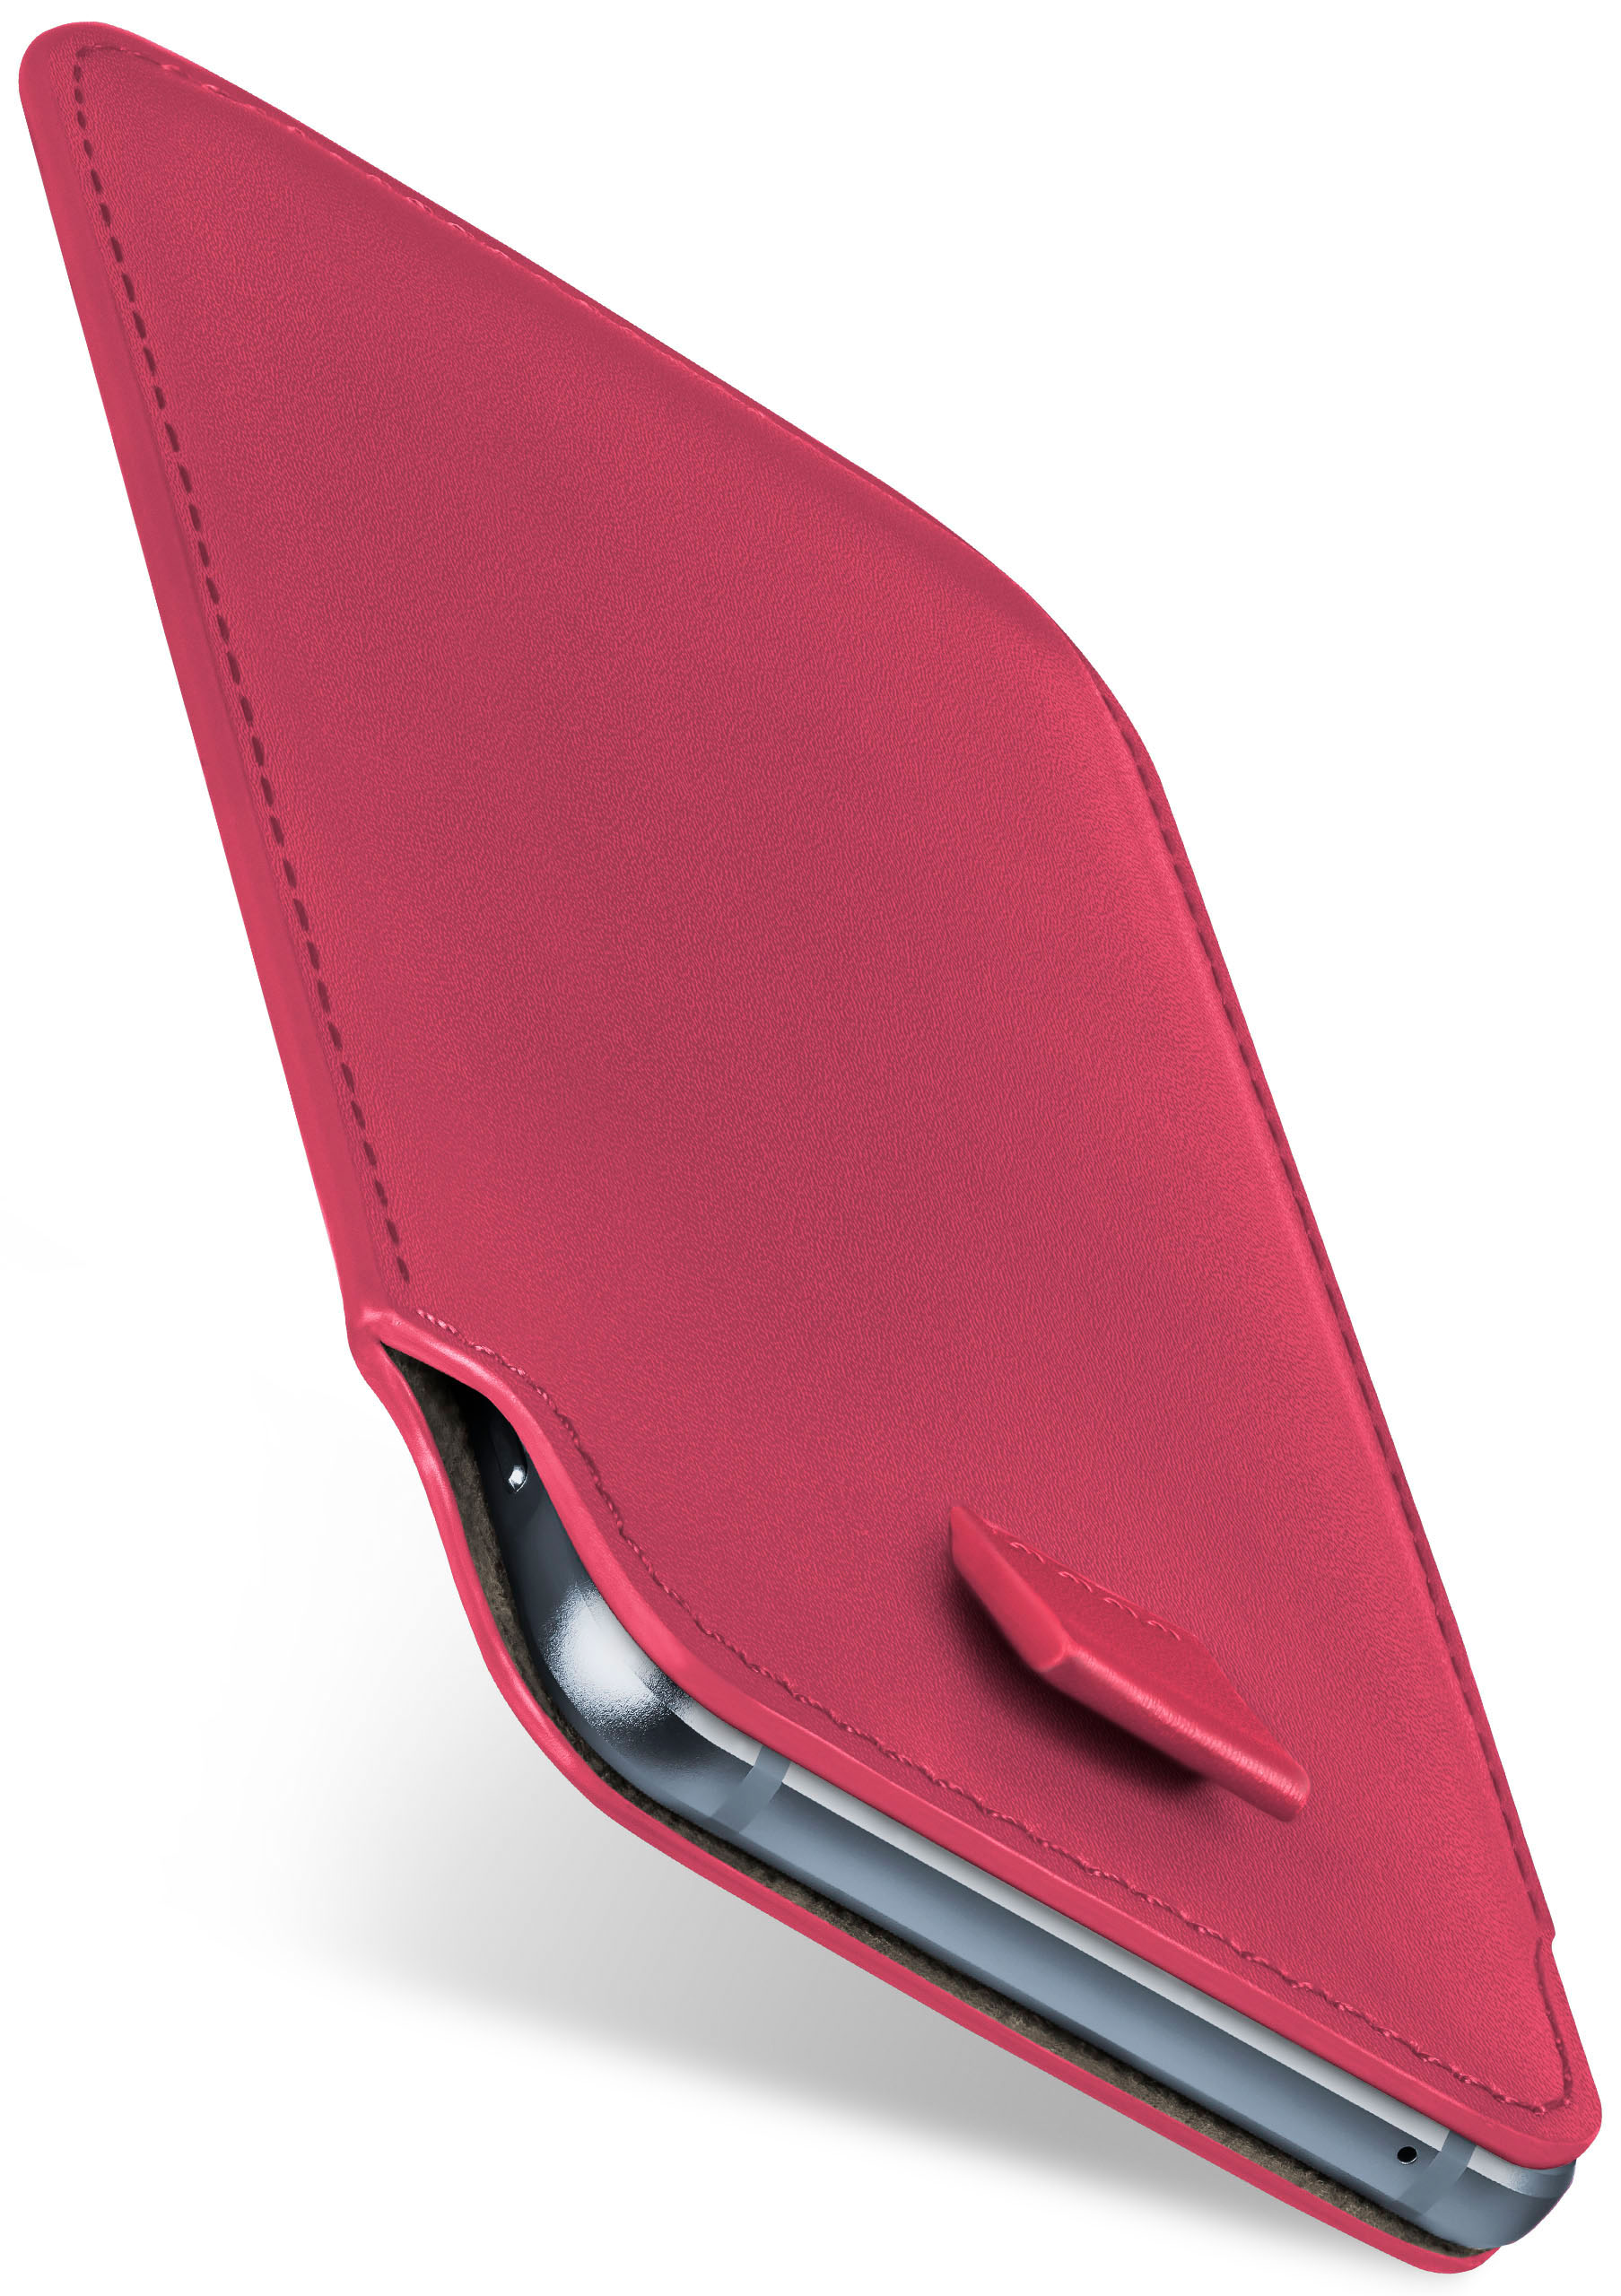 Pro, Slide MOEX Cover, View2 Berry-Fuchsia Wiko, Full Case,